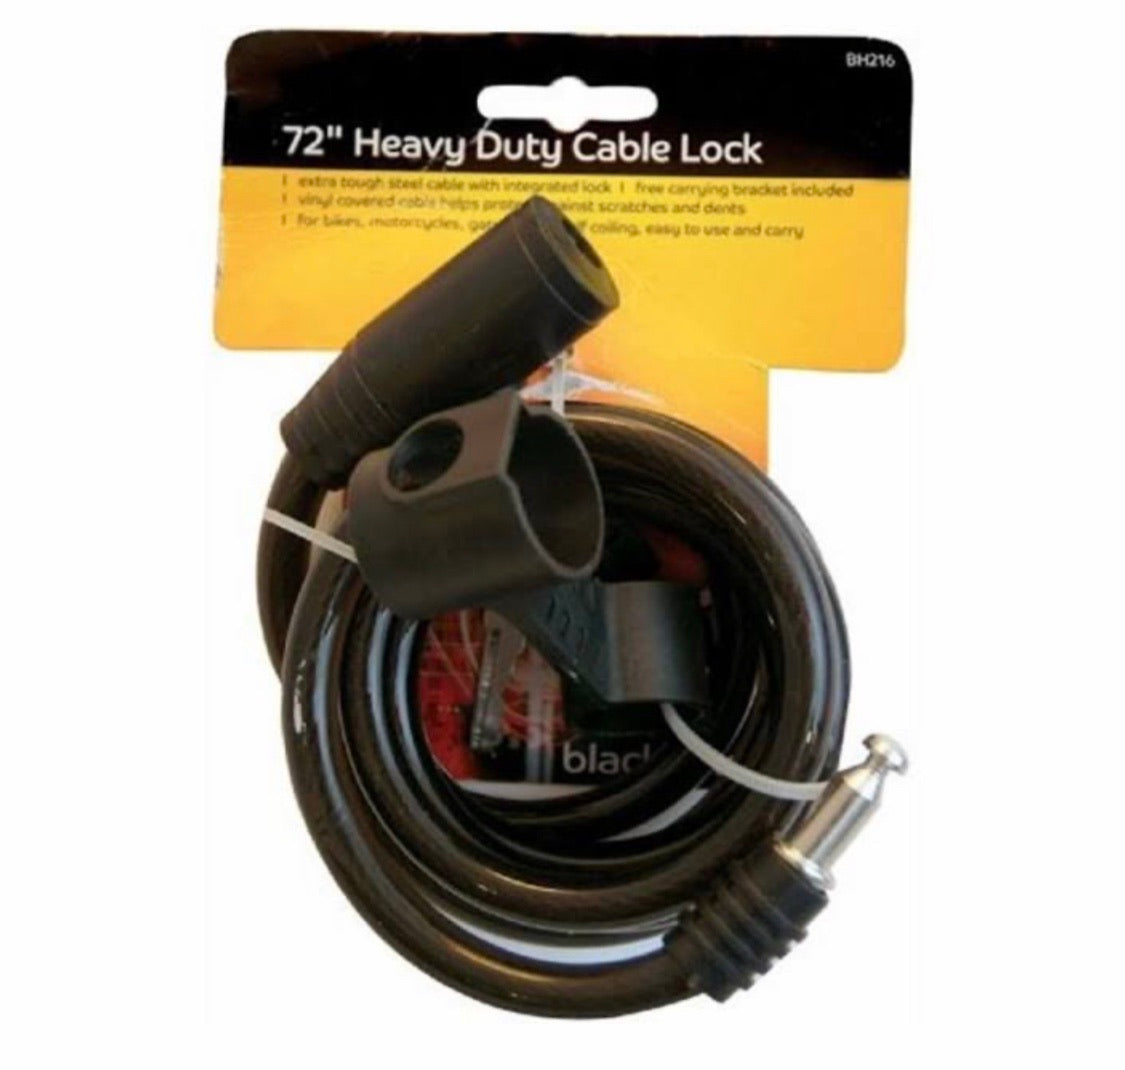 Blackspur 72” heavy duty cable bike lock